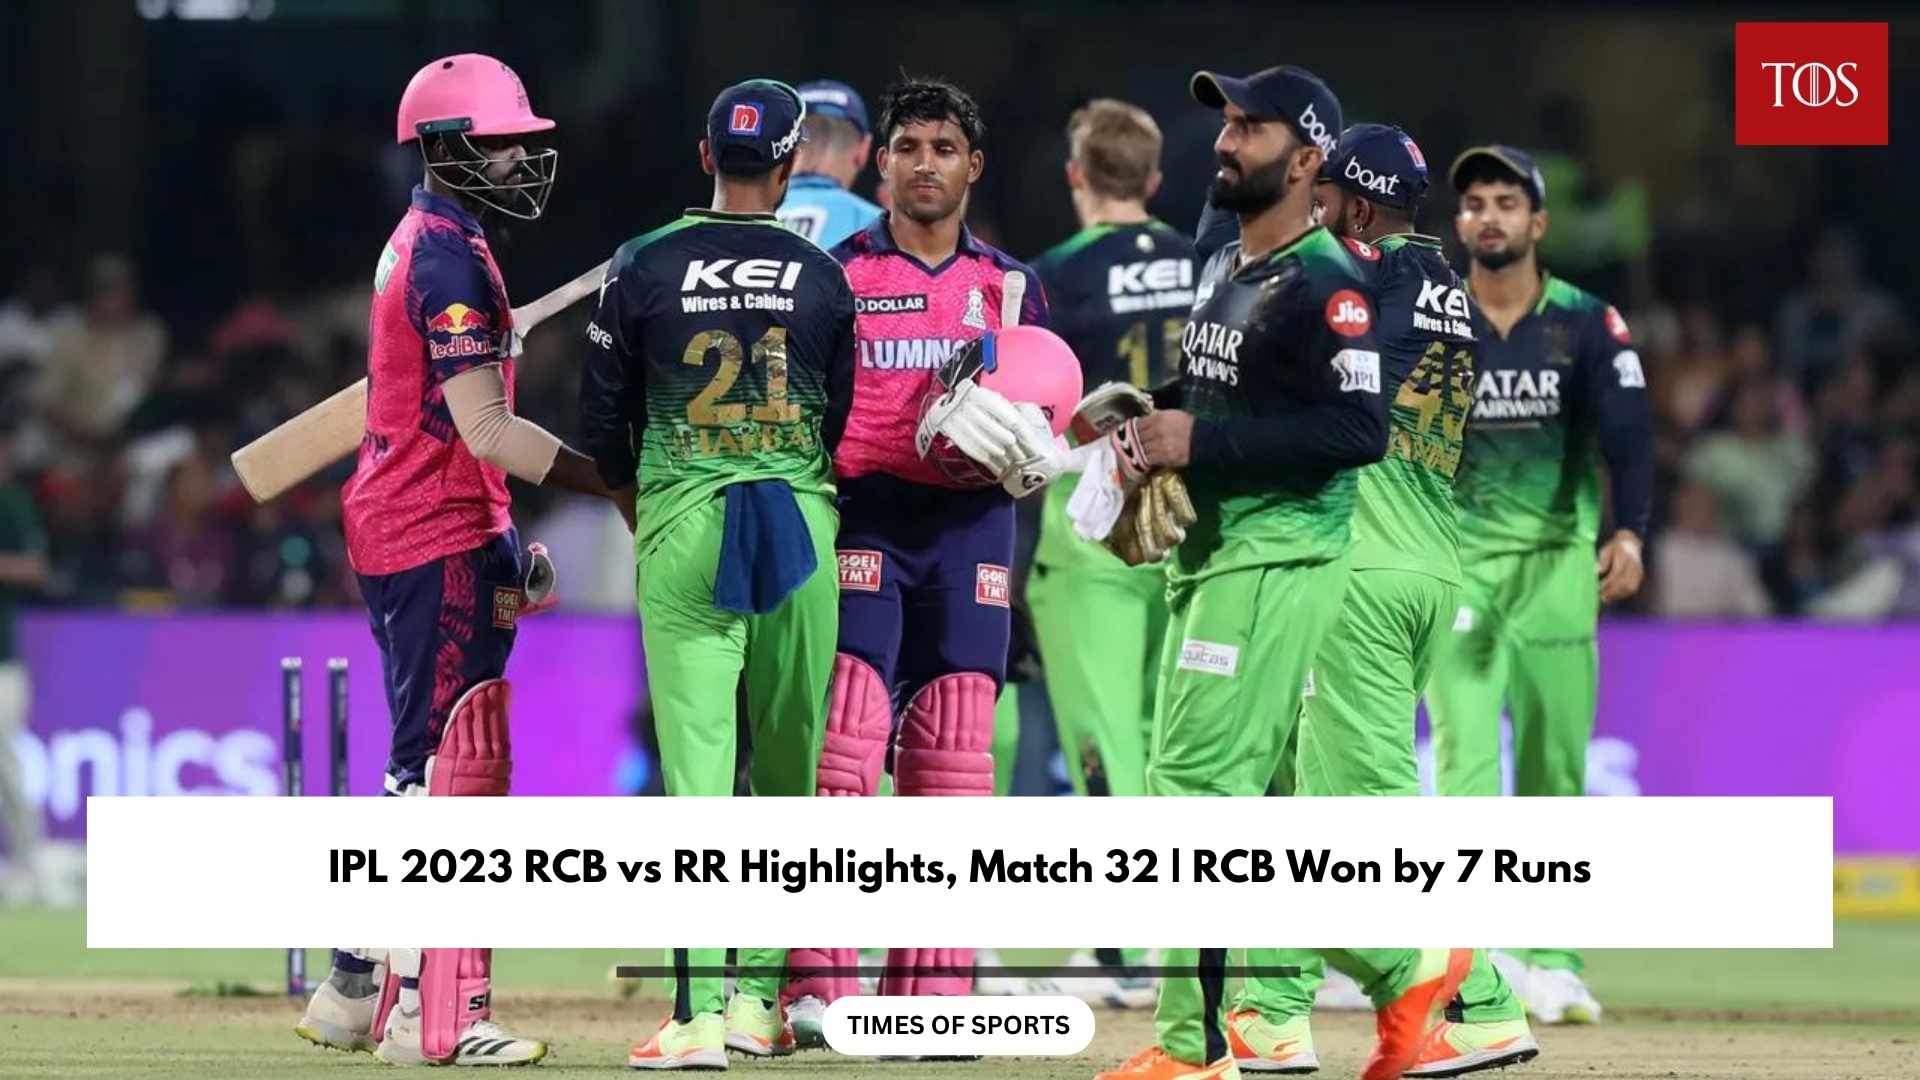 IPL 2023 RCB vs RR Highlights